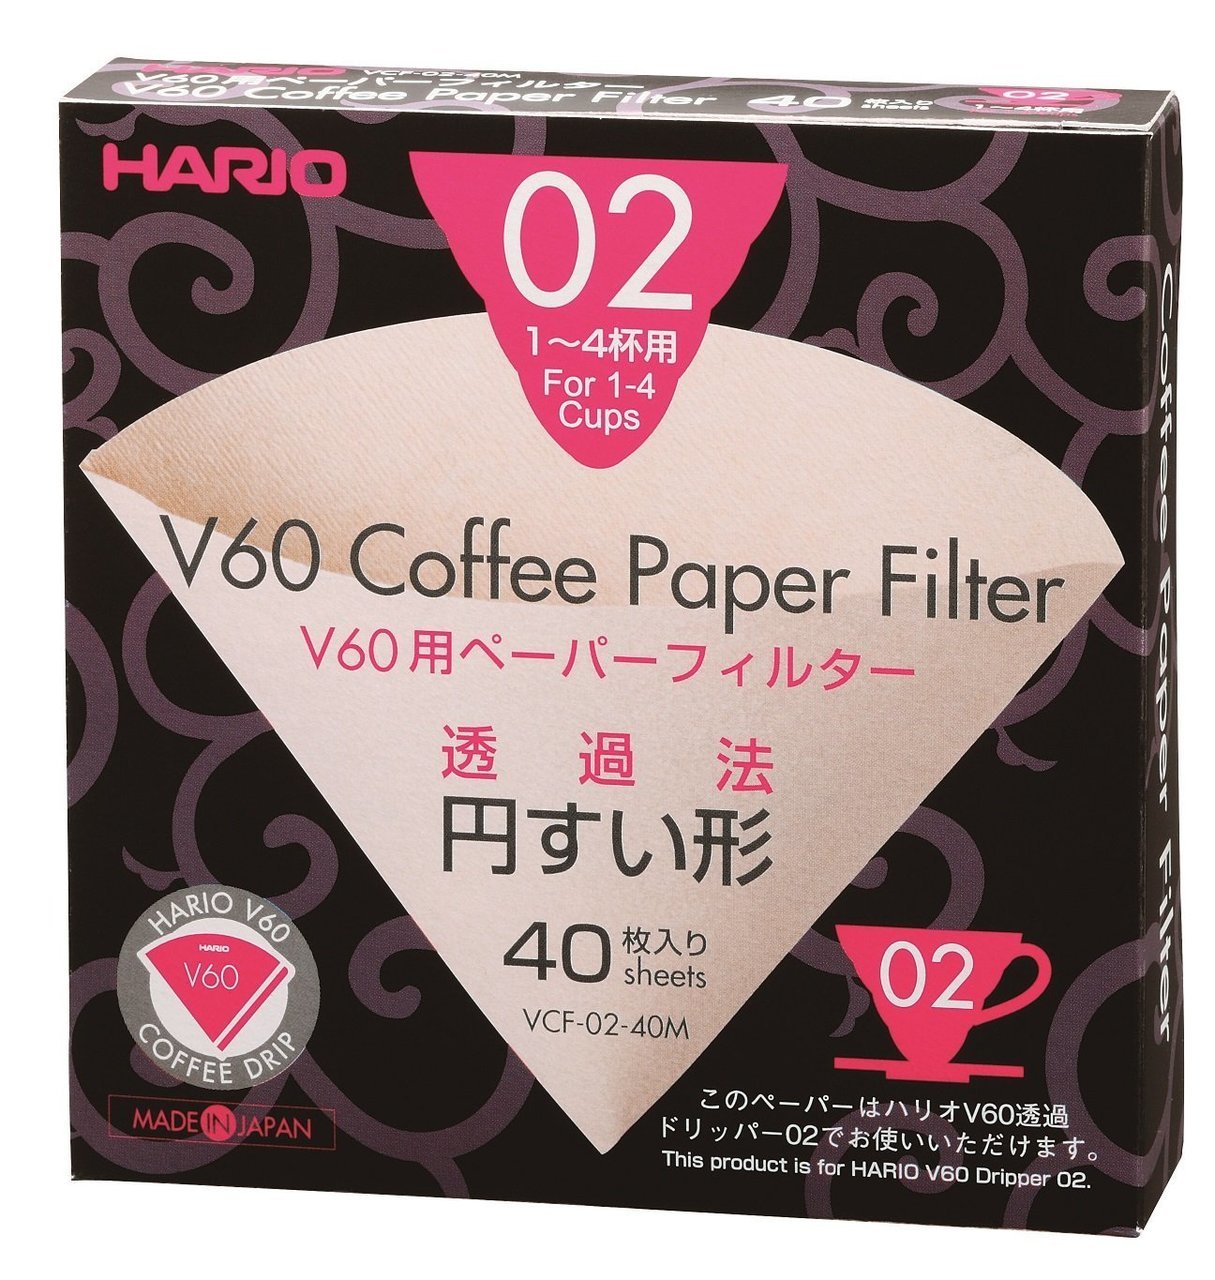 V60 Hario coffee filters